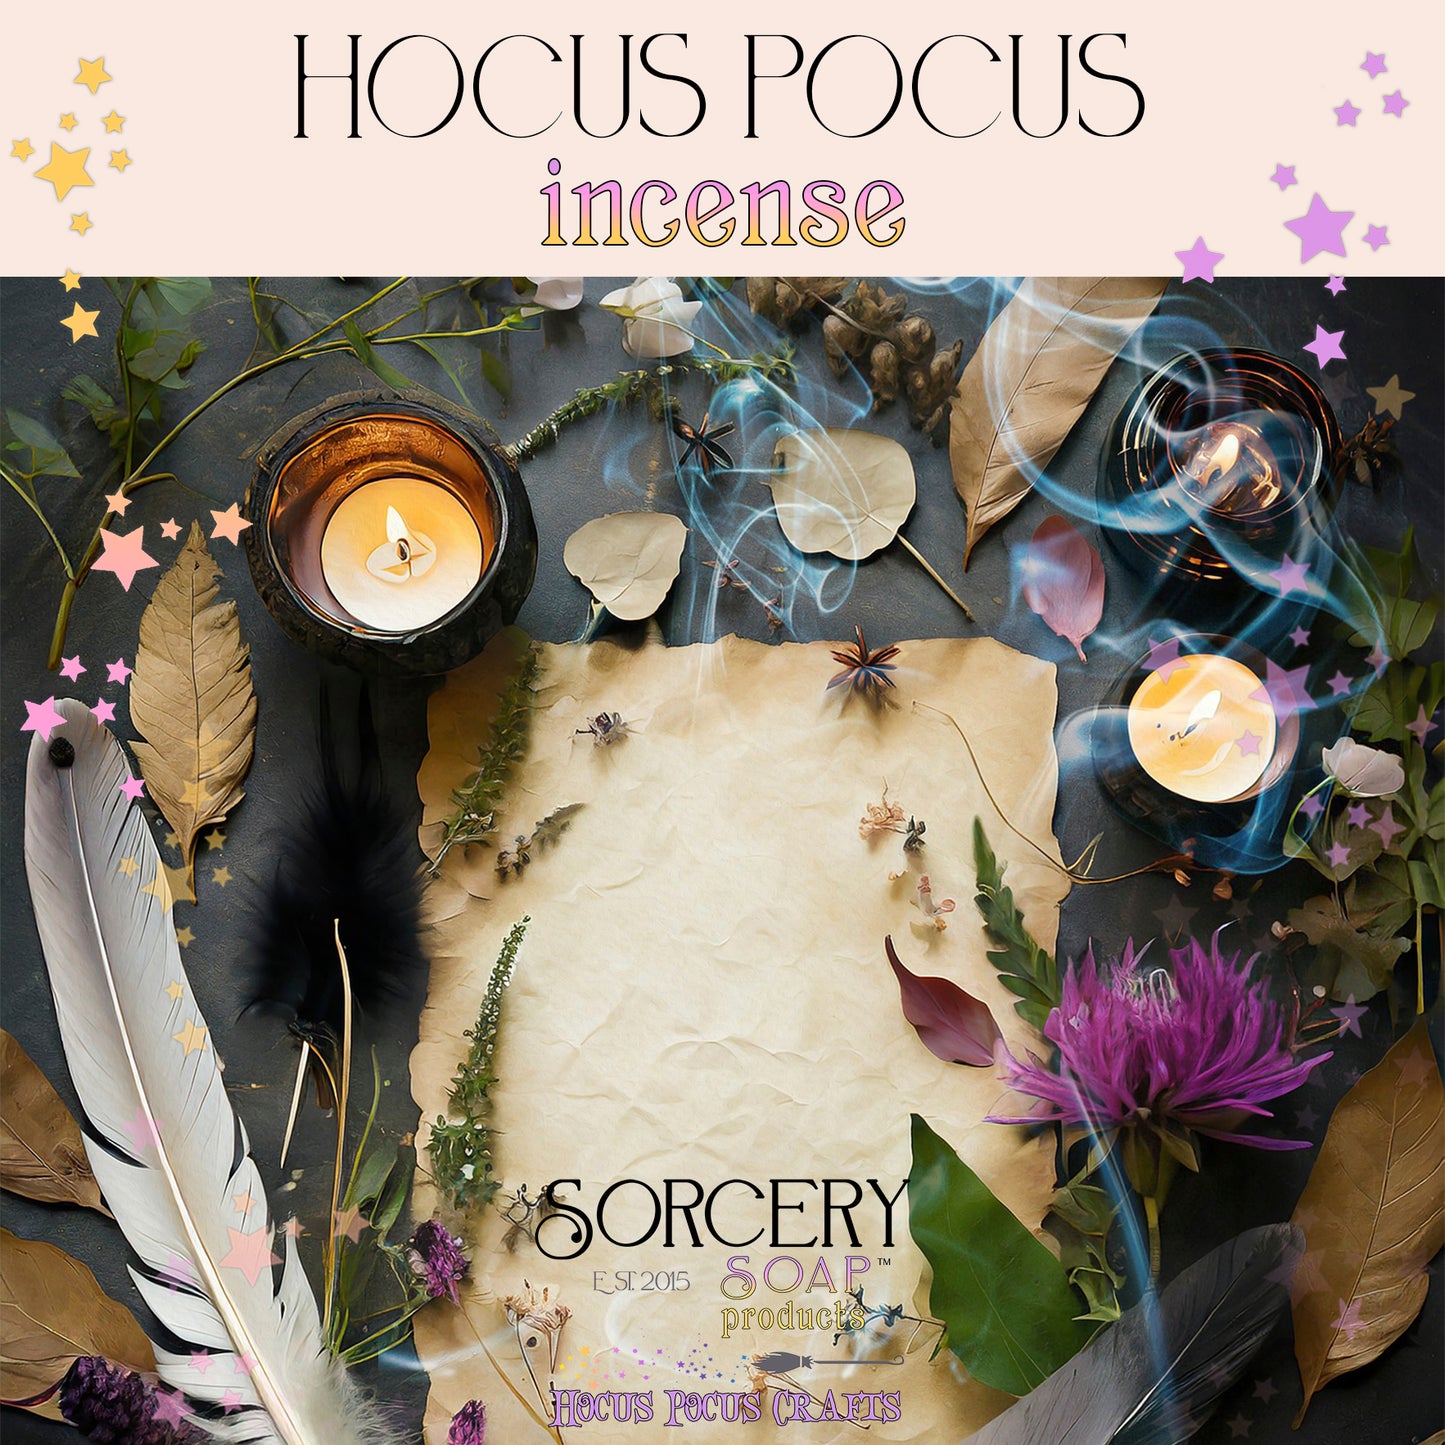 Sorcery Soap + Hocus Pocus Incense